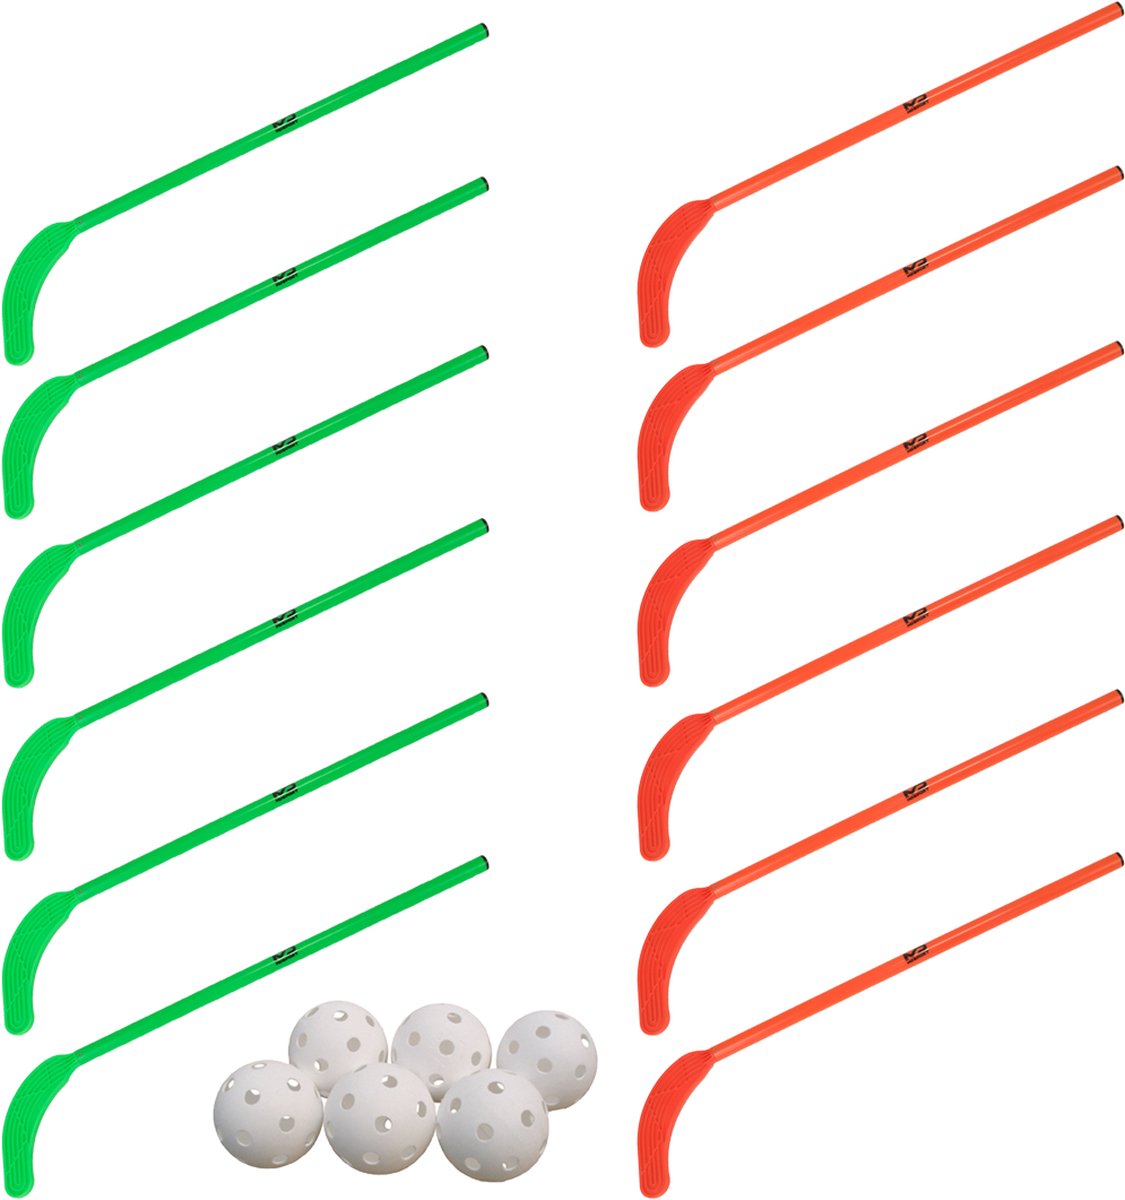 MDsport - Unihockey sticks - Kort - Floorball sticks - Kunststof hockeysticks - Set van 12 + 6 ballen - Basis onderwijs - Groen / Rood